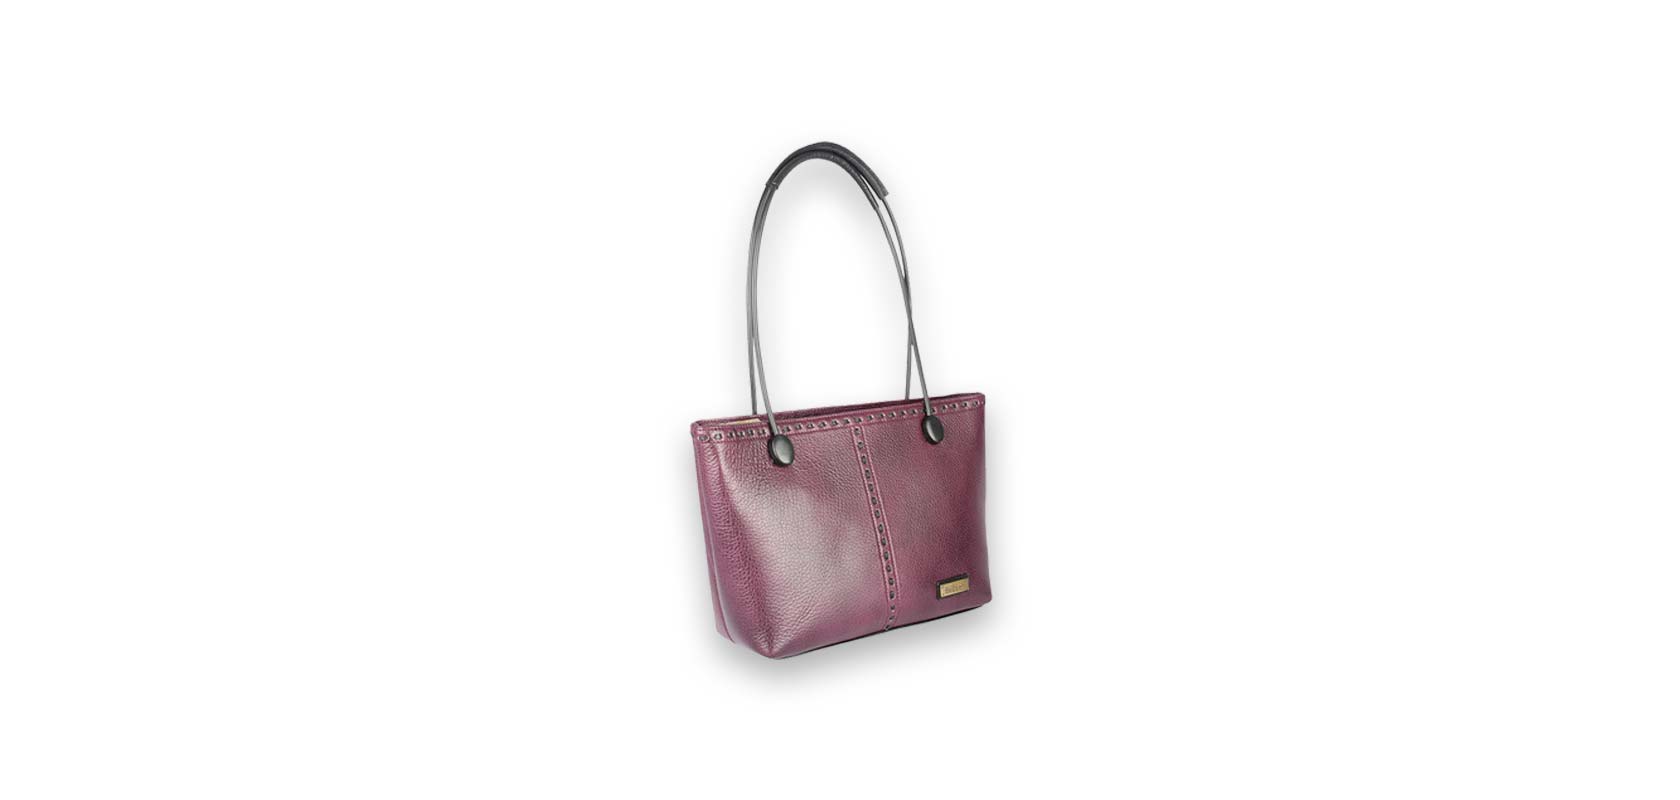  Spazio Leathers ladies handbag